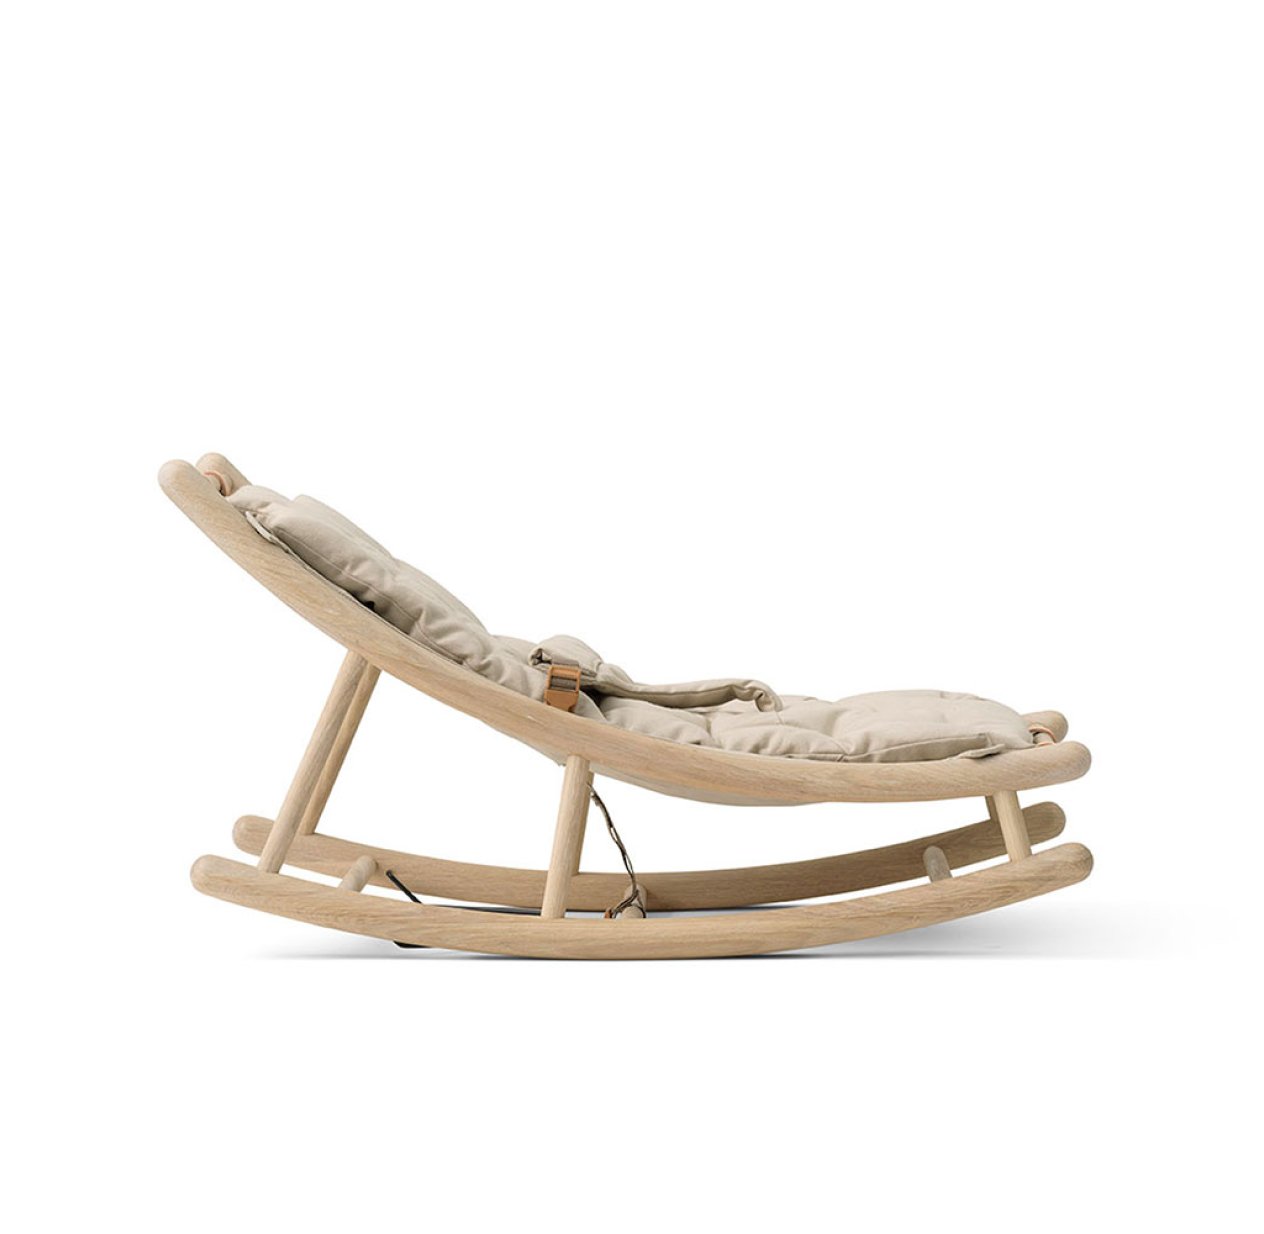 Transat Bébé évolutif Wood - Chêne/Naturel Oliver Furniture pour